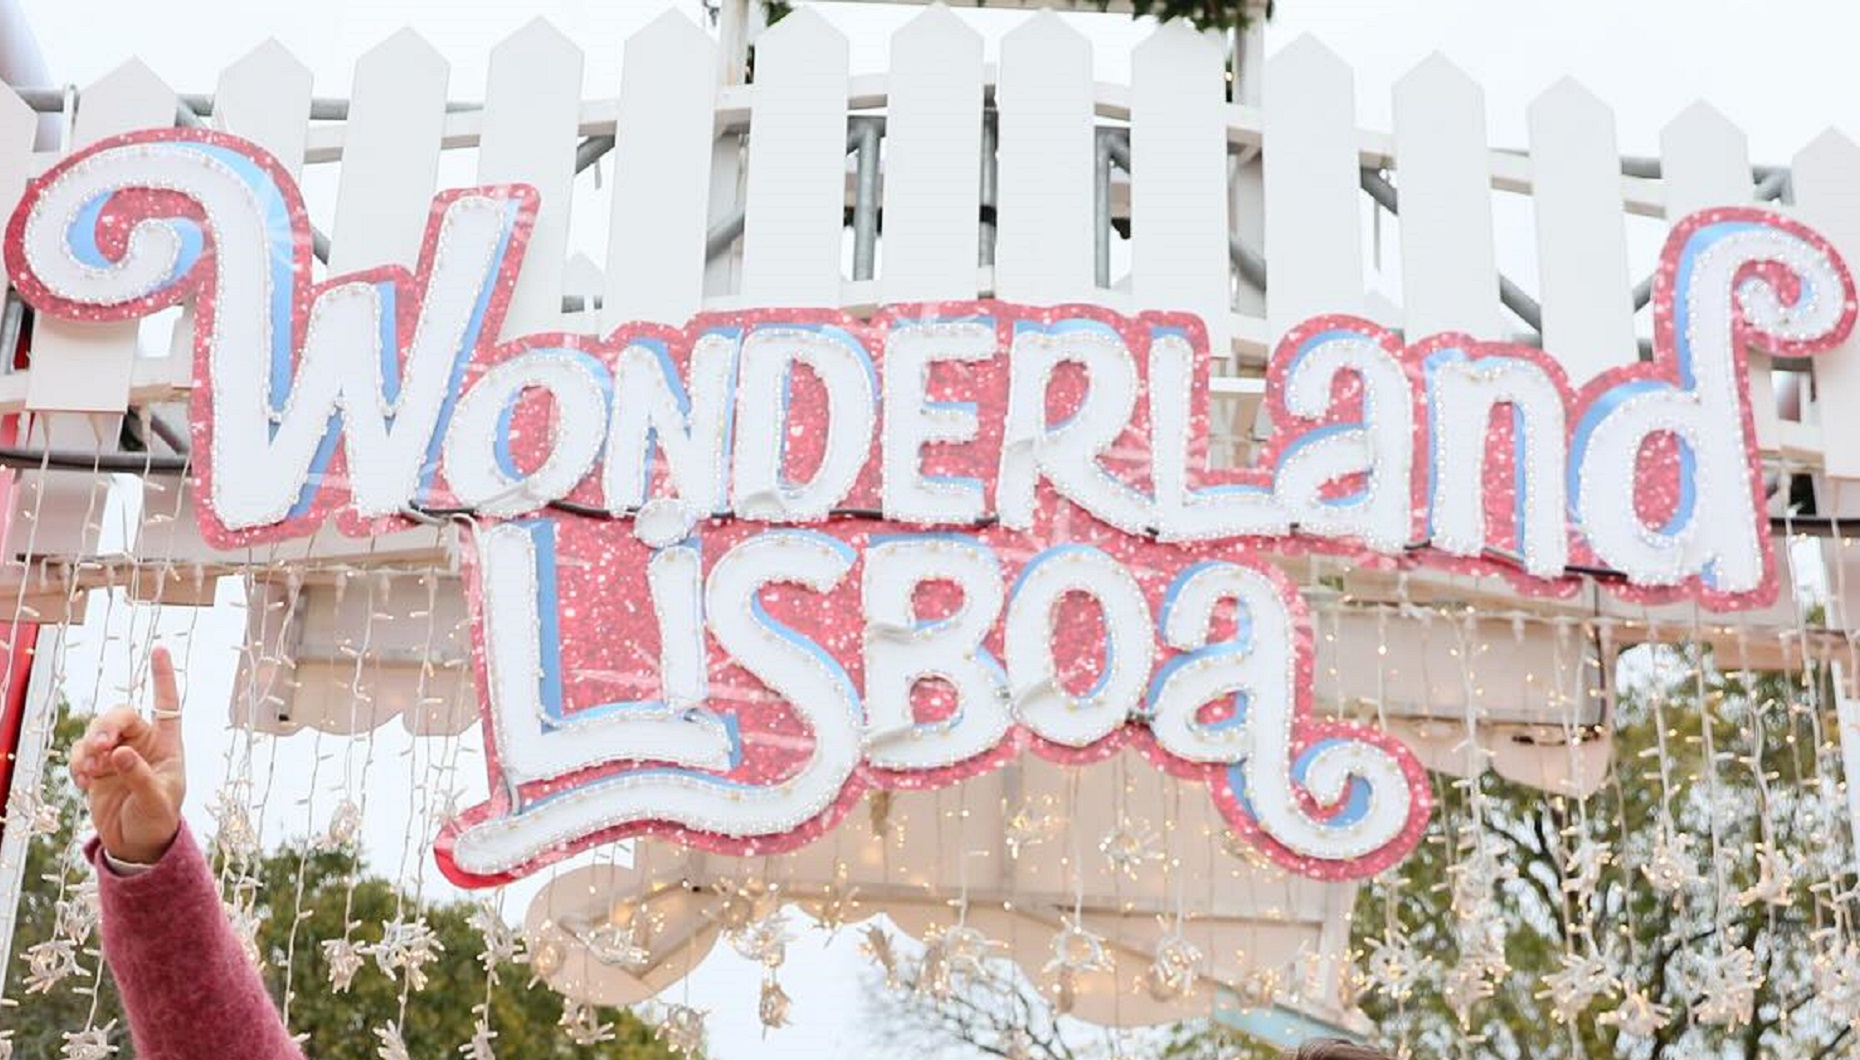 Wonderland Lisboa 2023